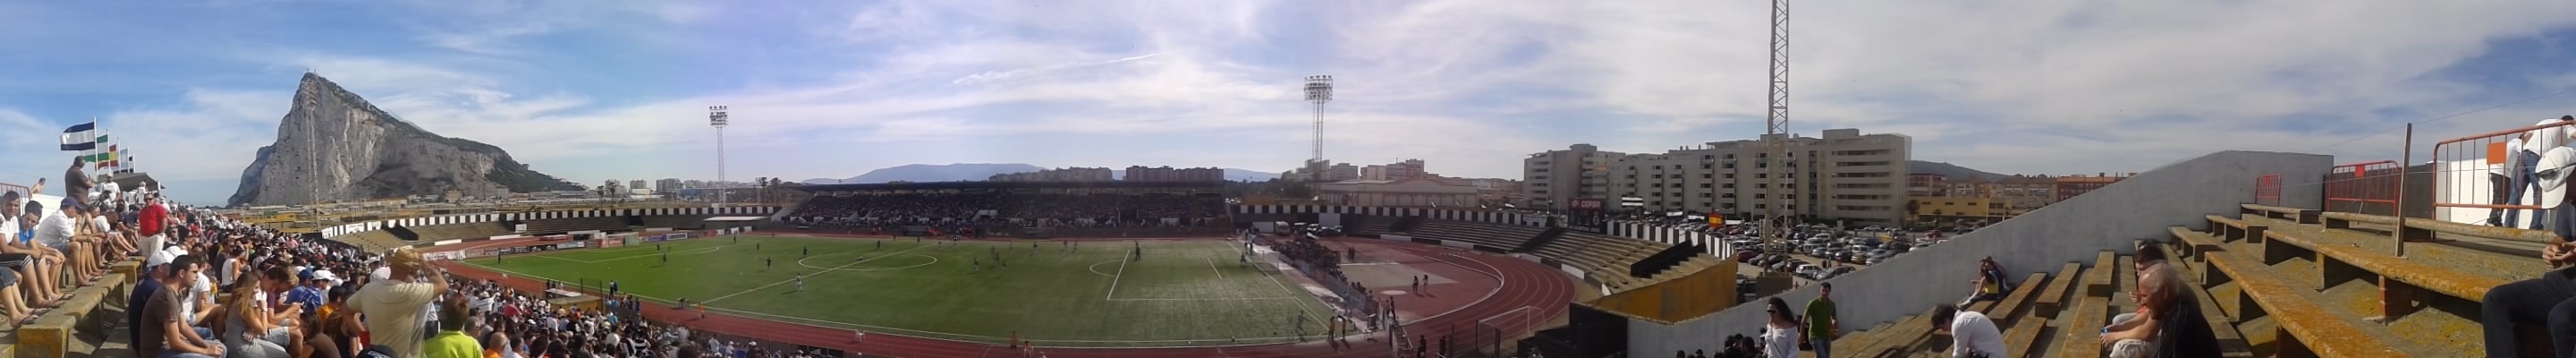 Estadio municipal de la RB Linense